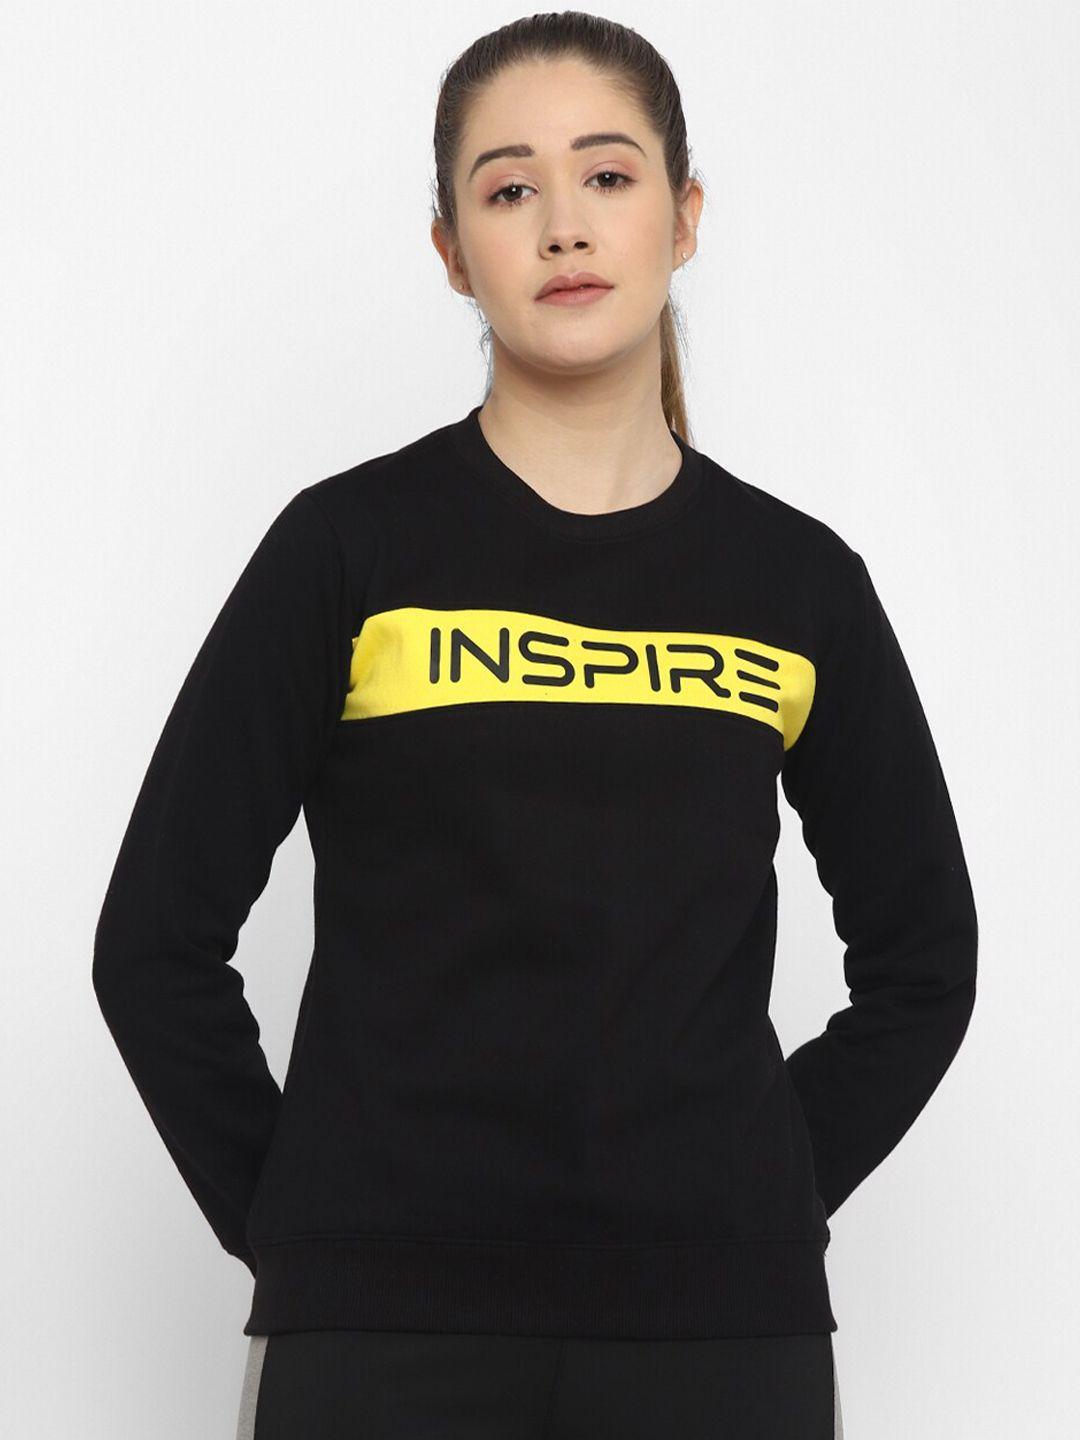 off-limits-women-black-printed-sweatshirt